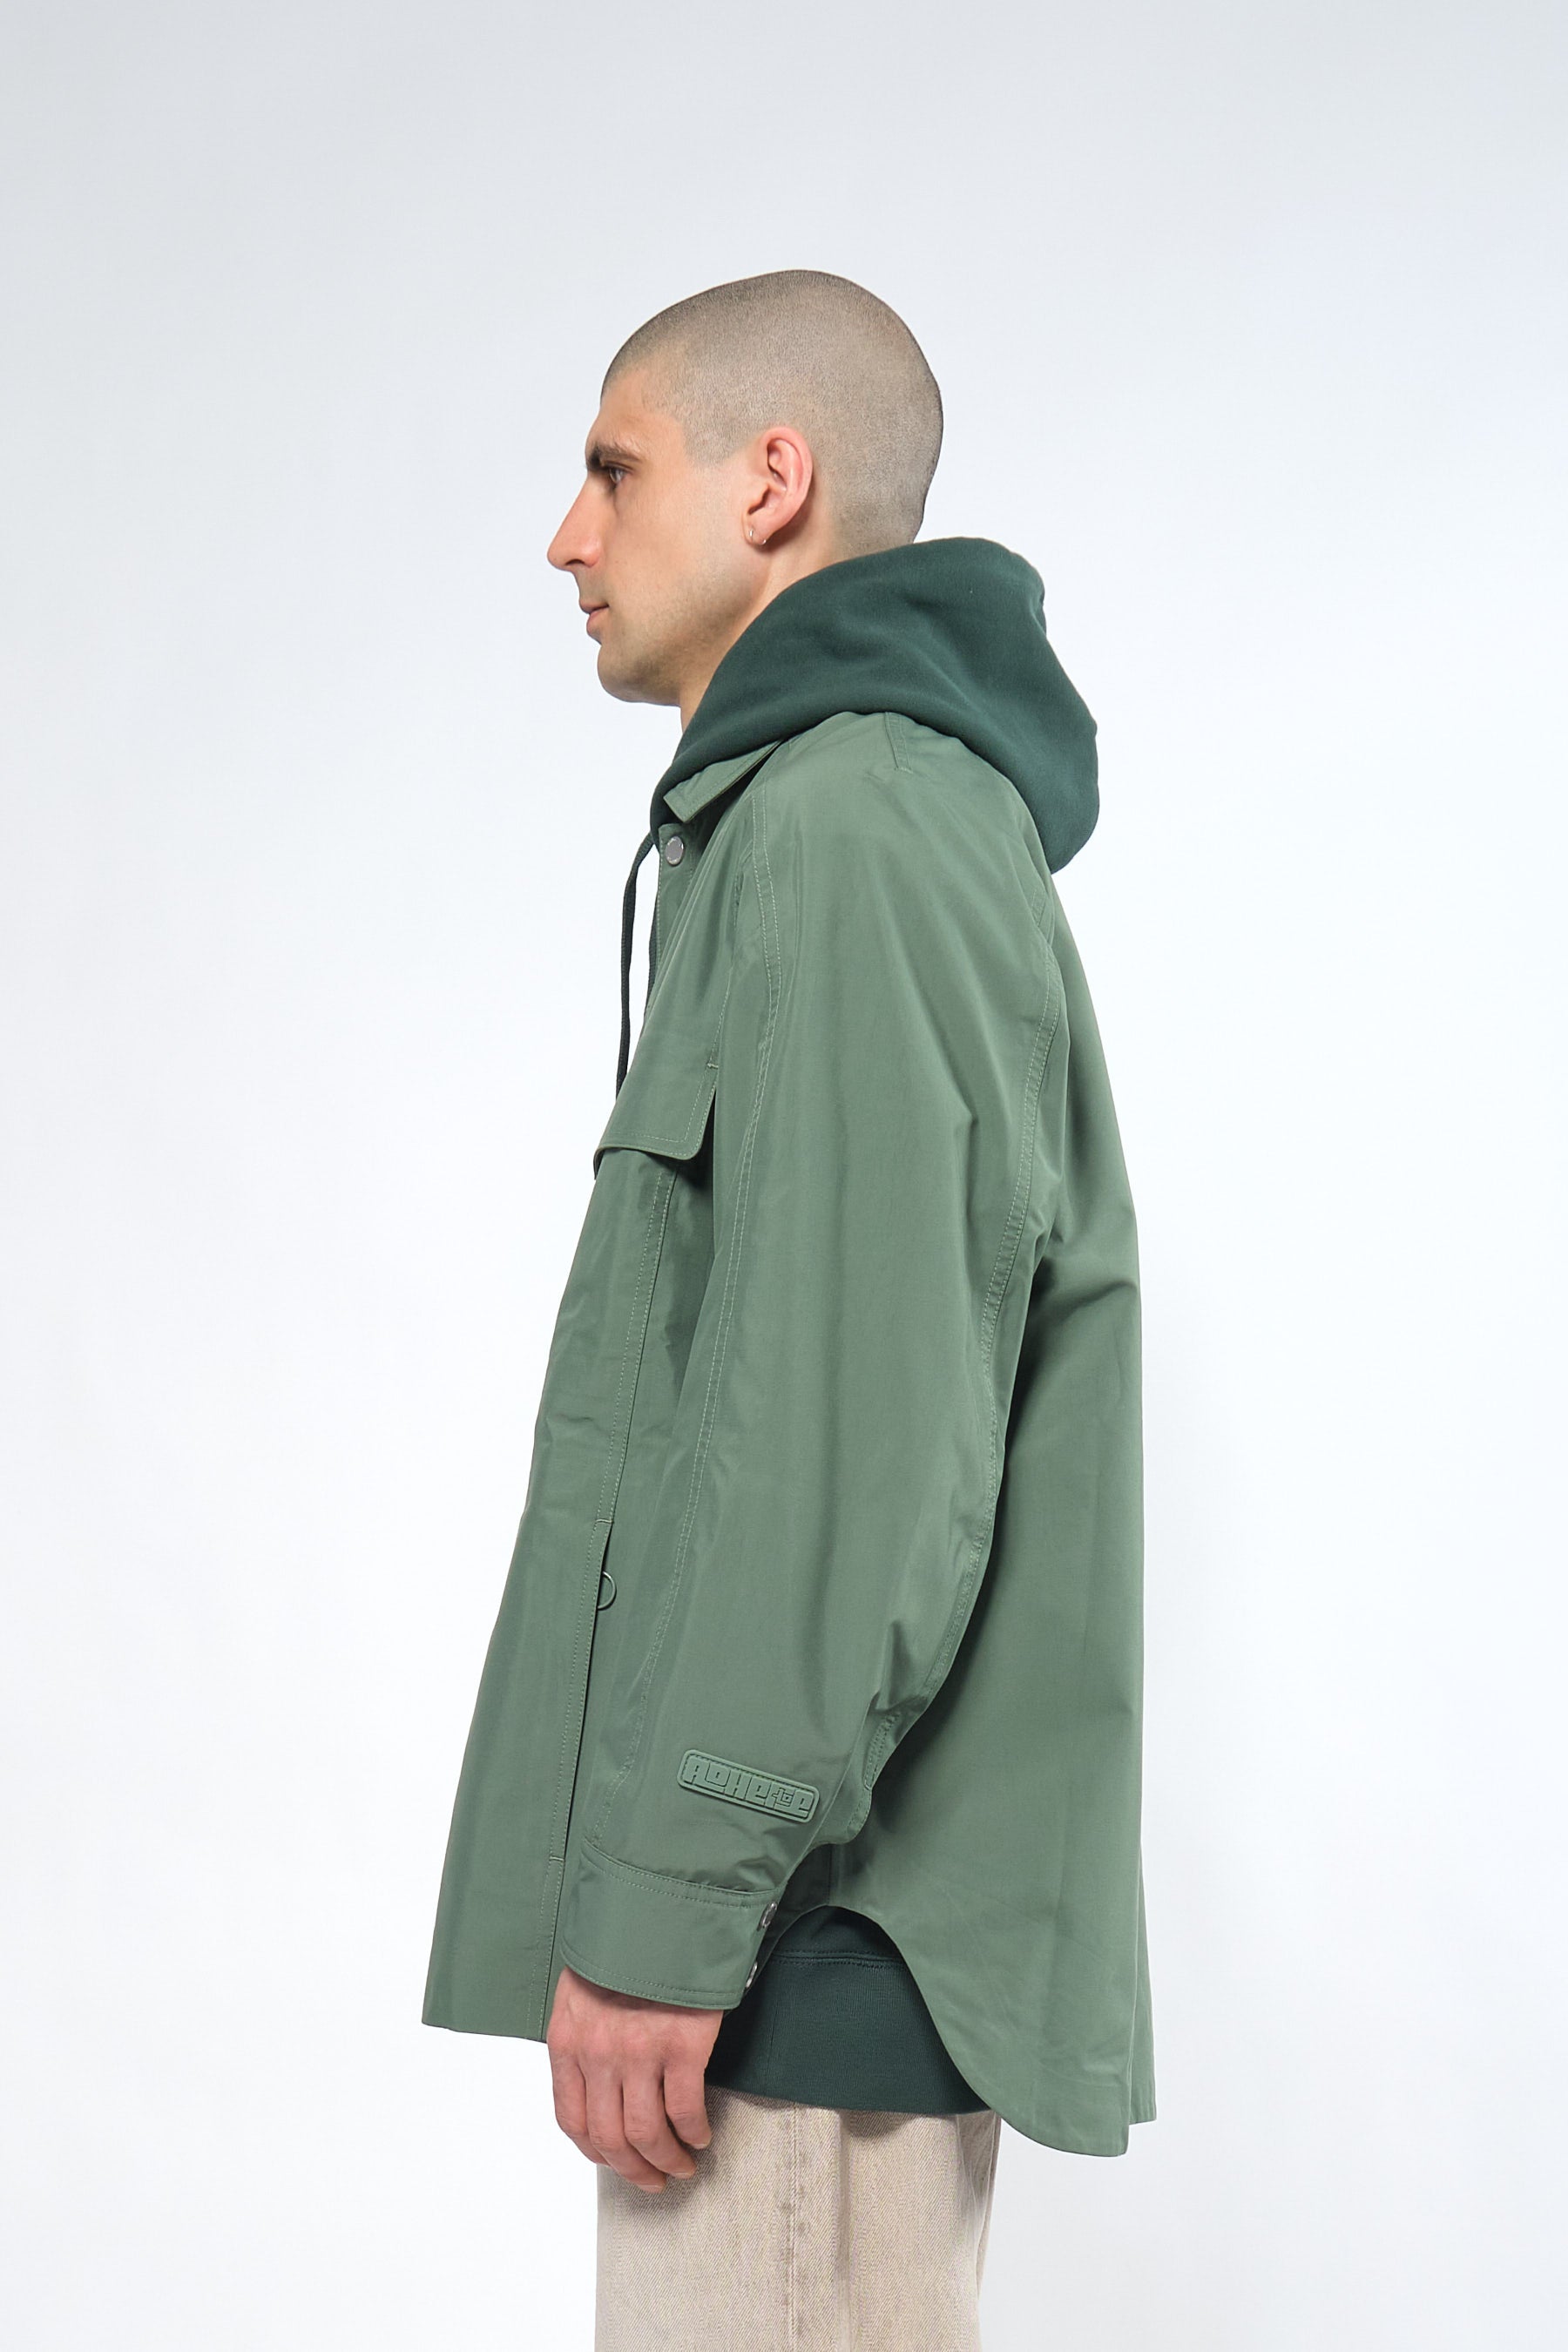  3L Green Waterproof Rain Jacket with Hood - Adhere To  - 5